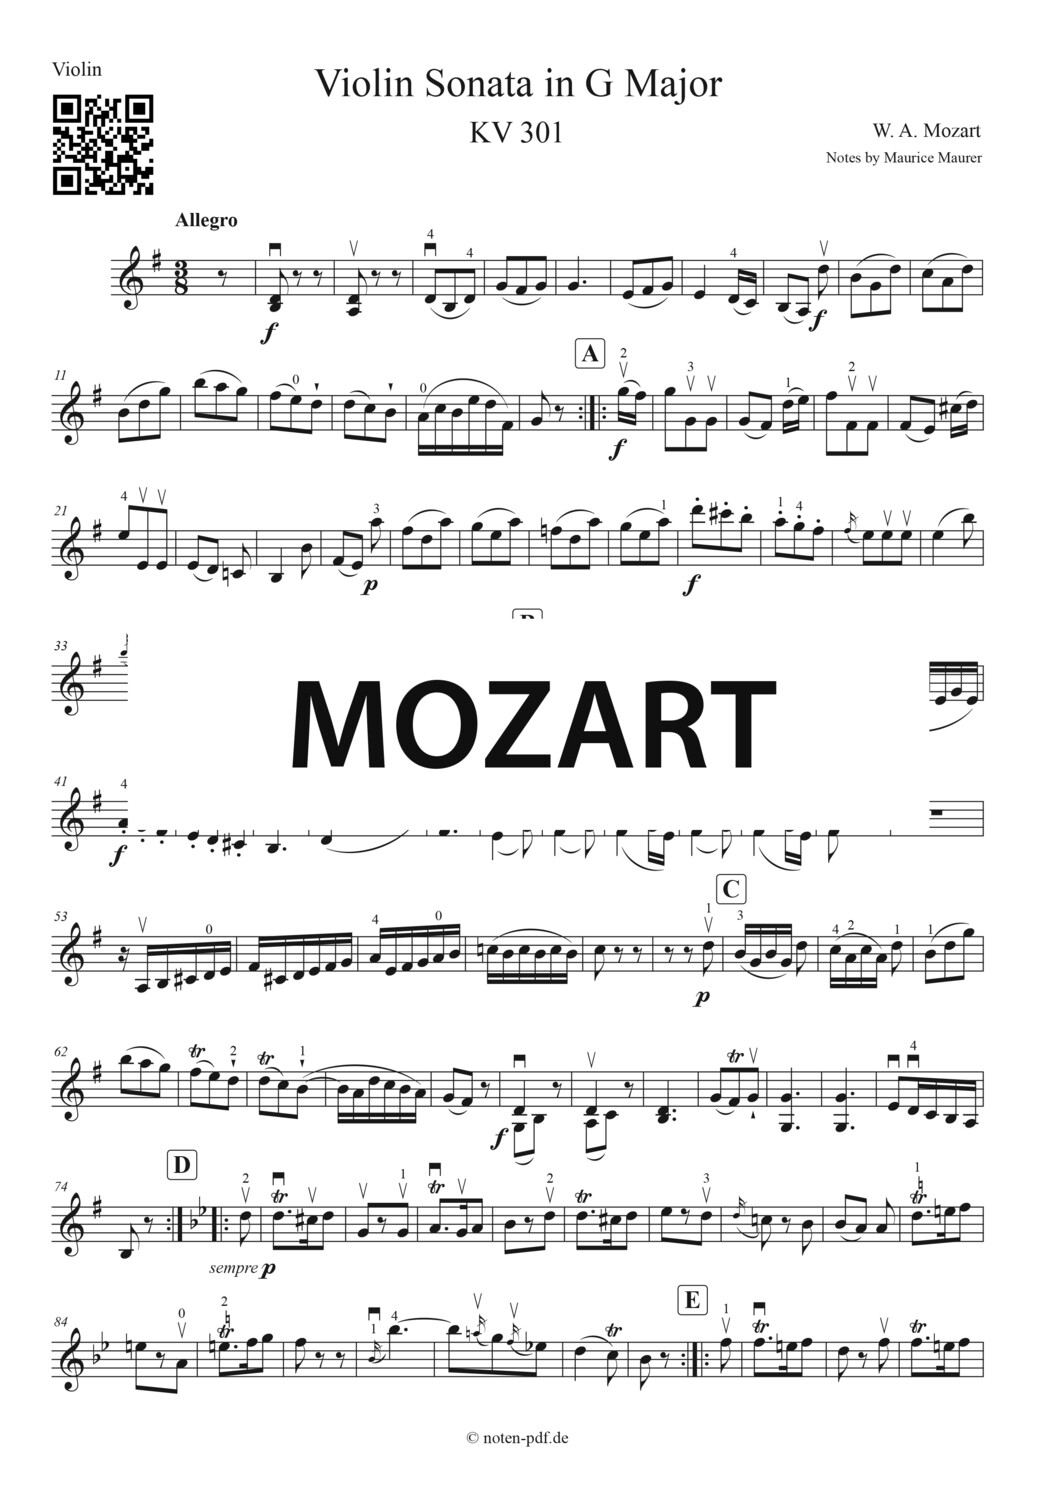 Mozart: Violin Sonate KV 301 in G Major 2. Movement (Violin Sheet Music)